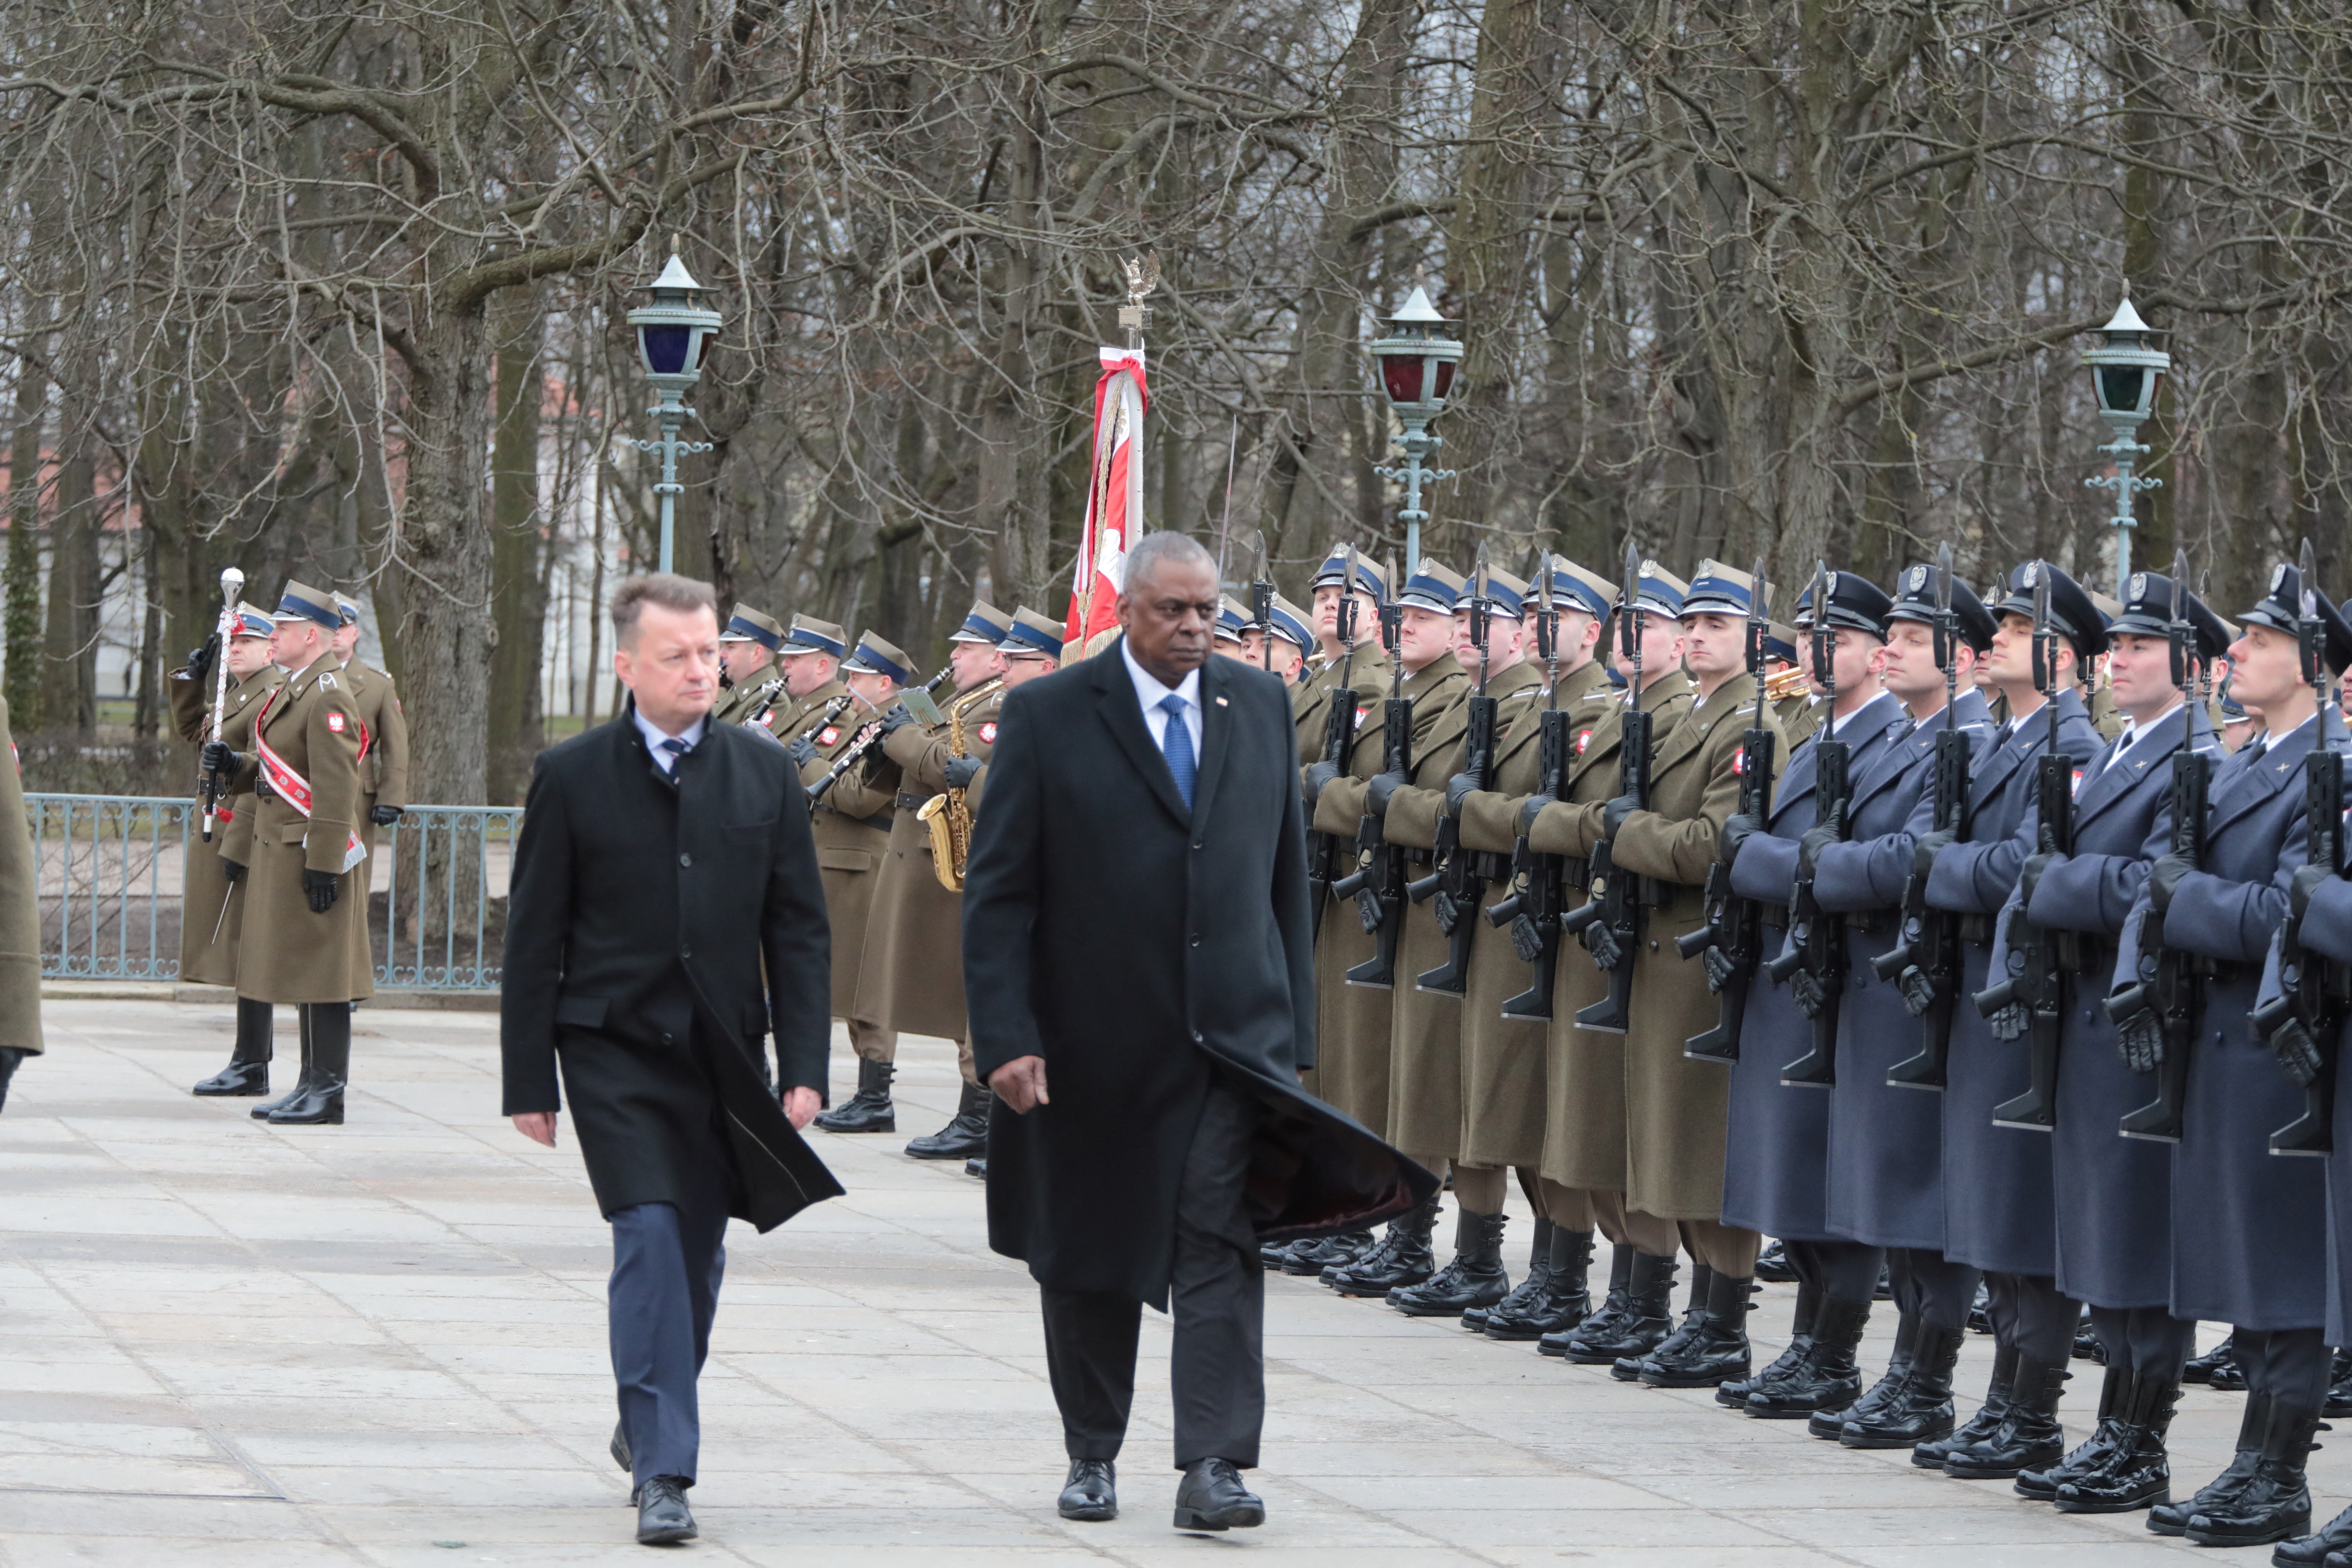 U.S. Defense Secretary Austin meets with Polish Defence Minister Blaszczak in Warsaw